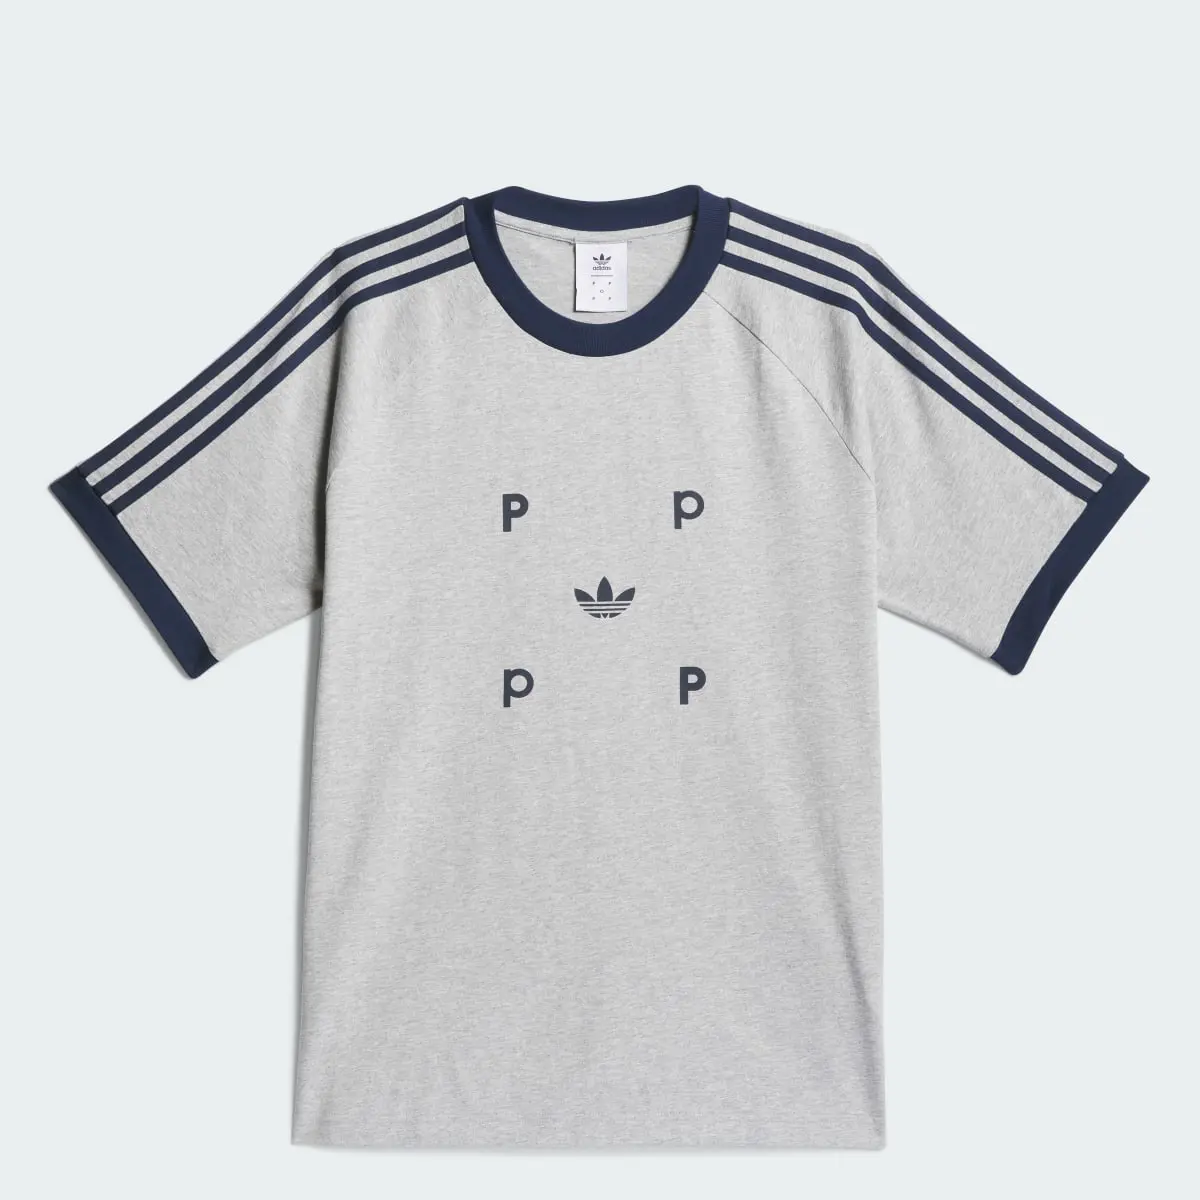 Adidas T-shirt Clássica Pop. 1